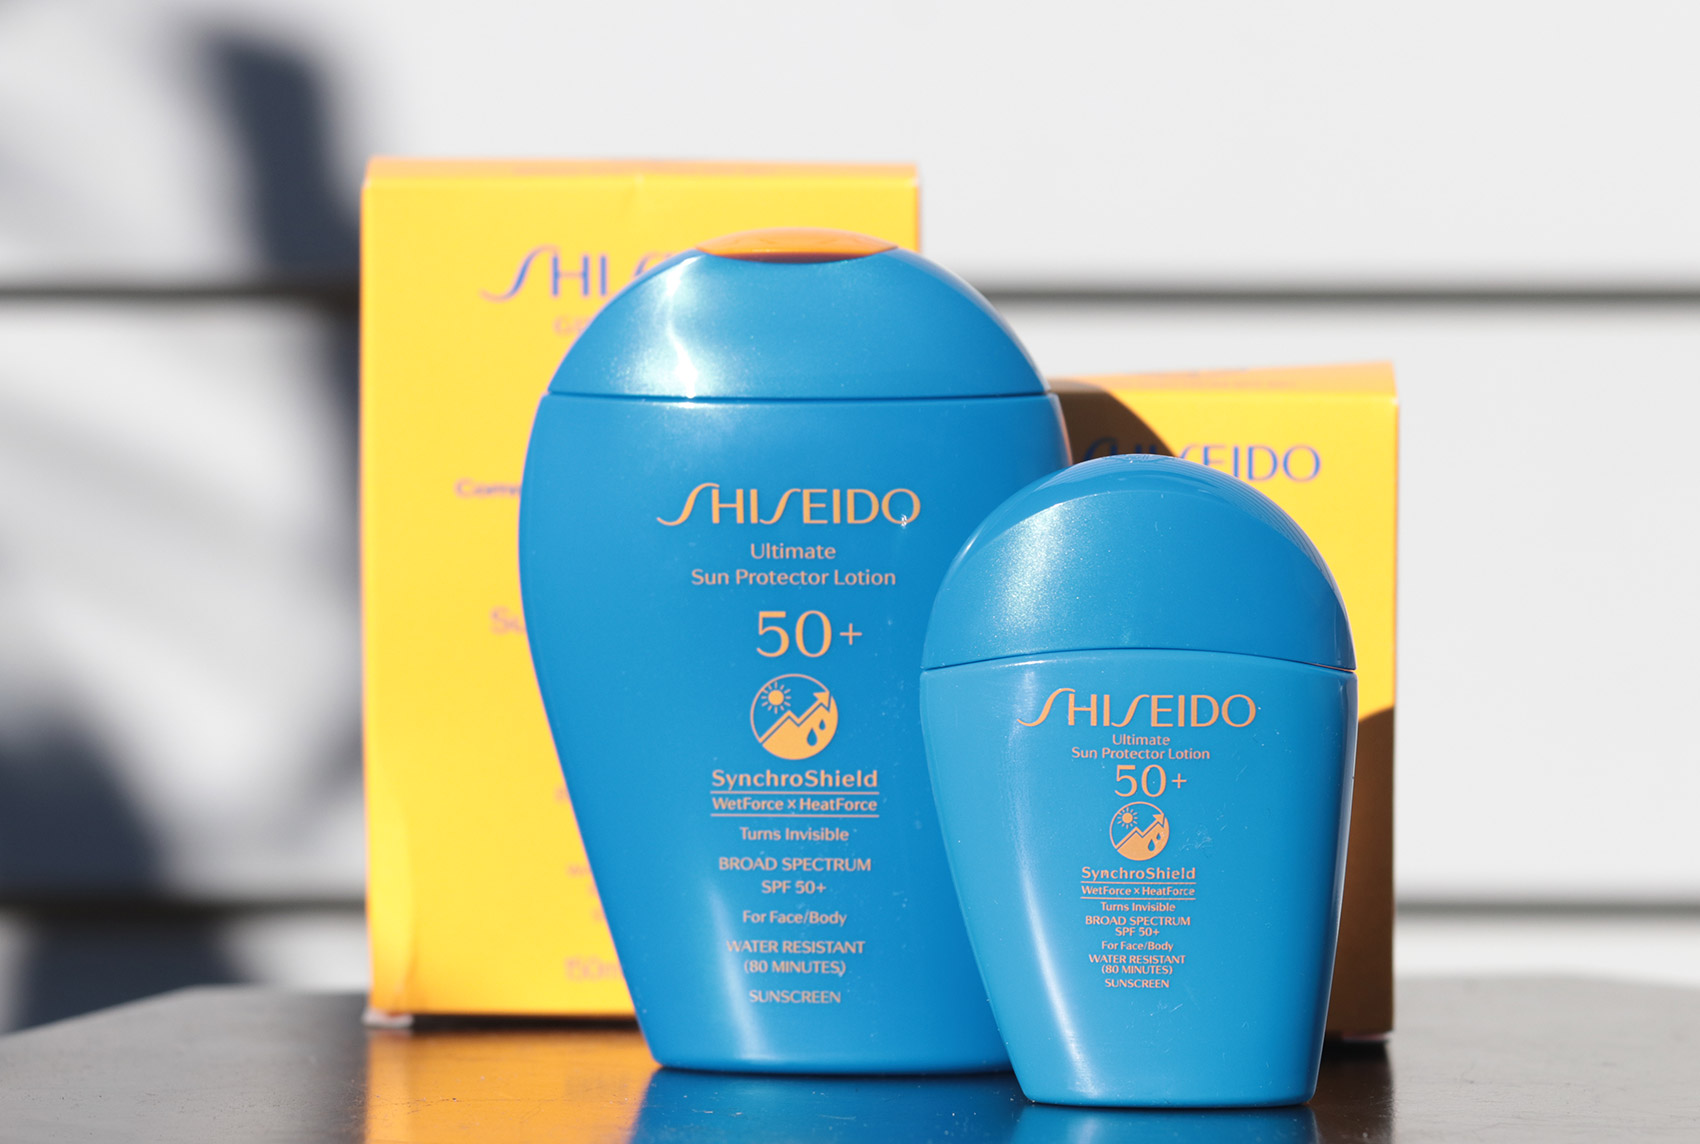 Shiseido Sunscreen.